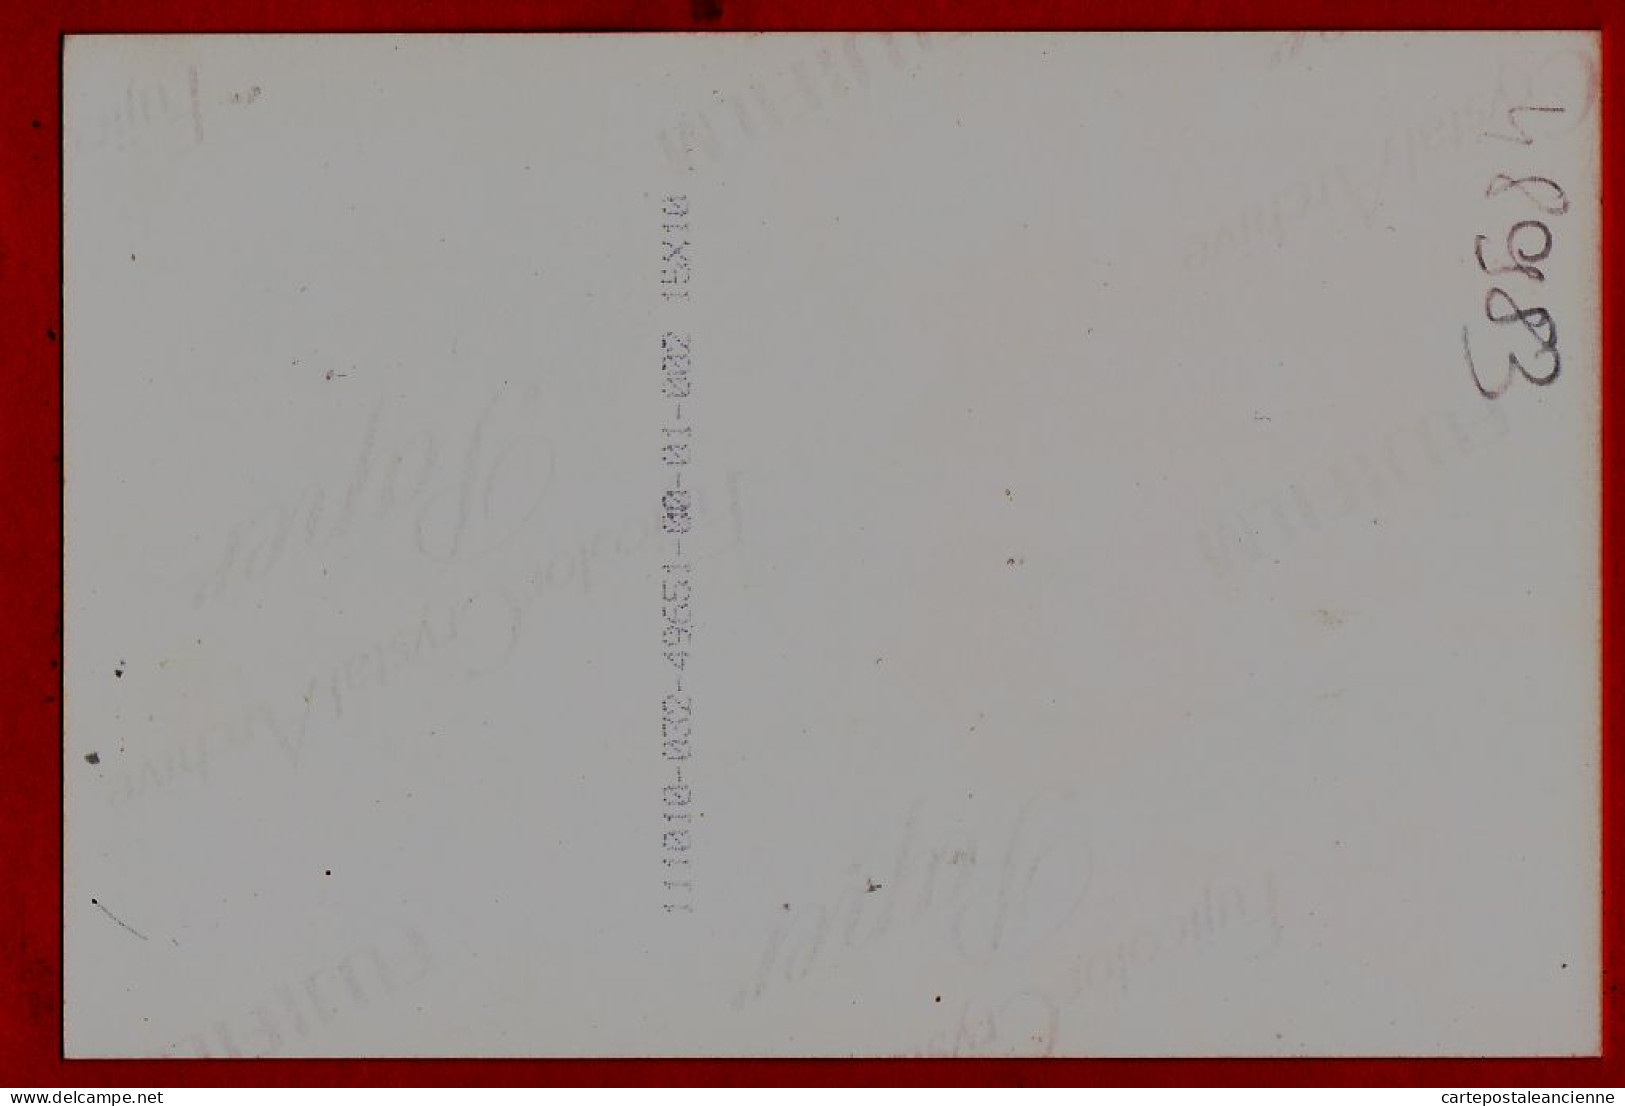 05234 ● SYLVIE VARTAN Tee-shirt Aigle Américain 1985s Photographie Sur Papier Fujifilm 10x15cm - Chanteurs & Musiciens